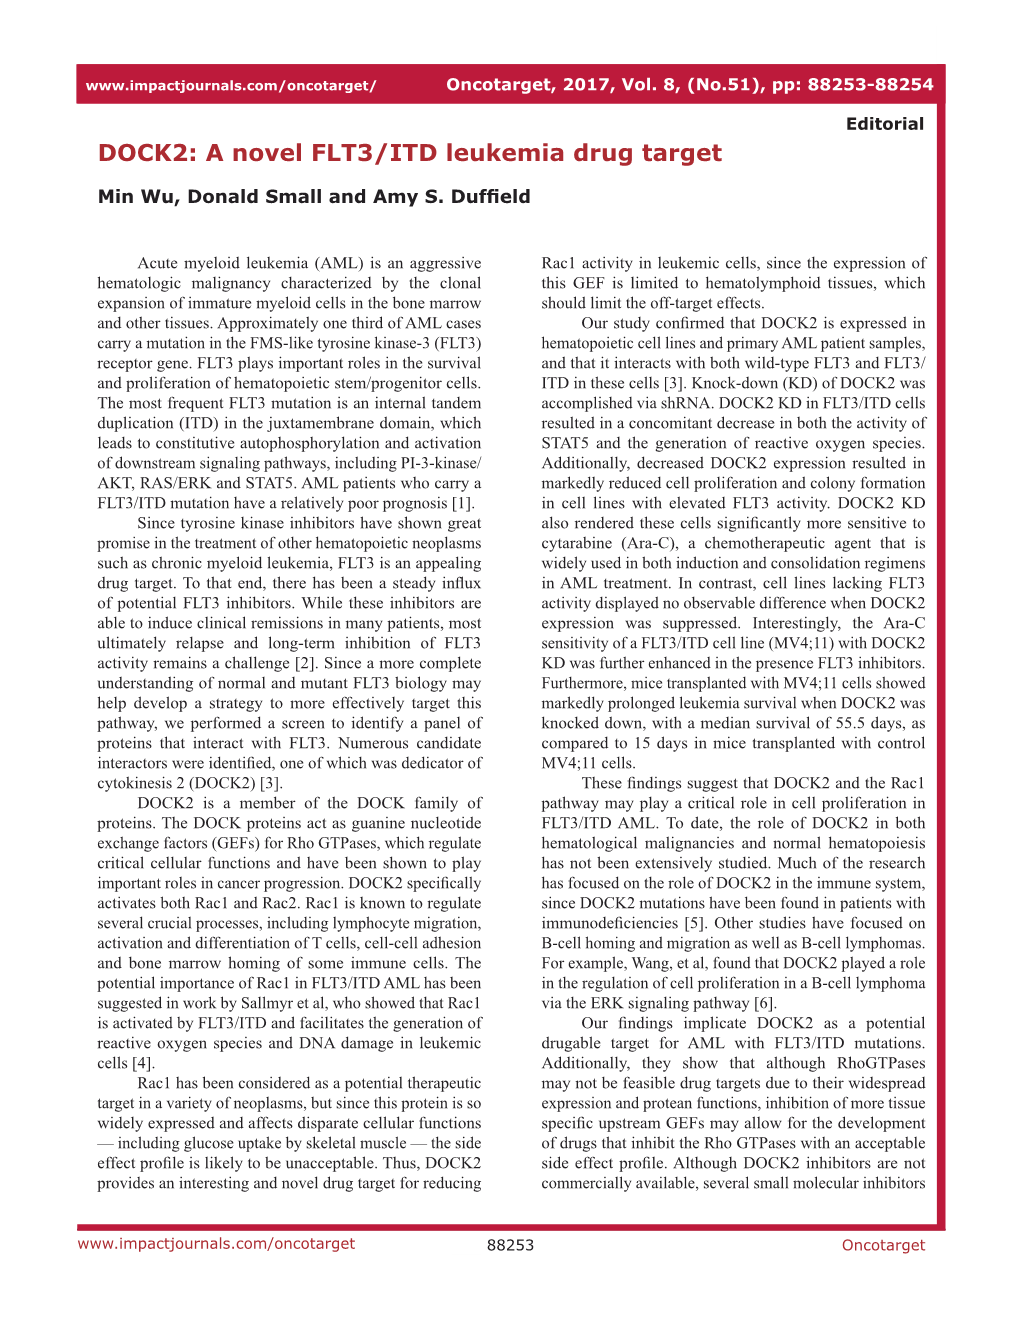 DOCK2: a Novel FLT3/ITD Leukemia Drug Target